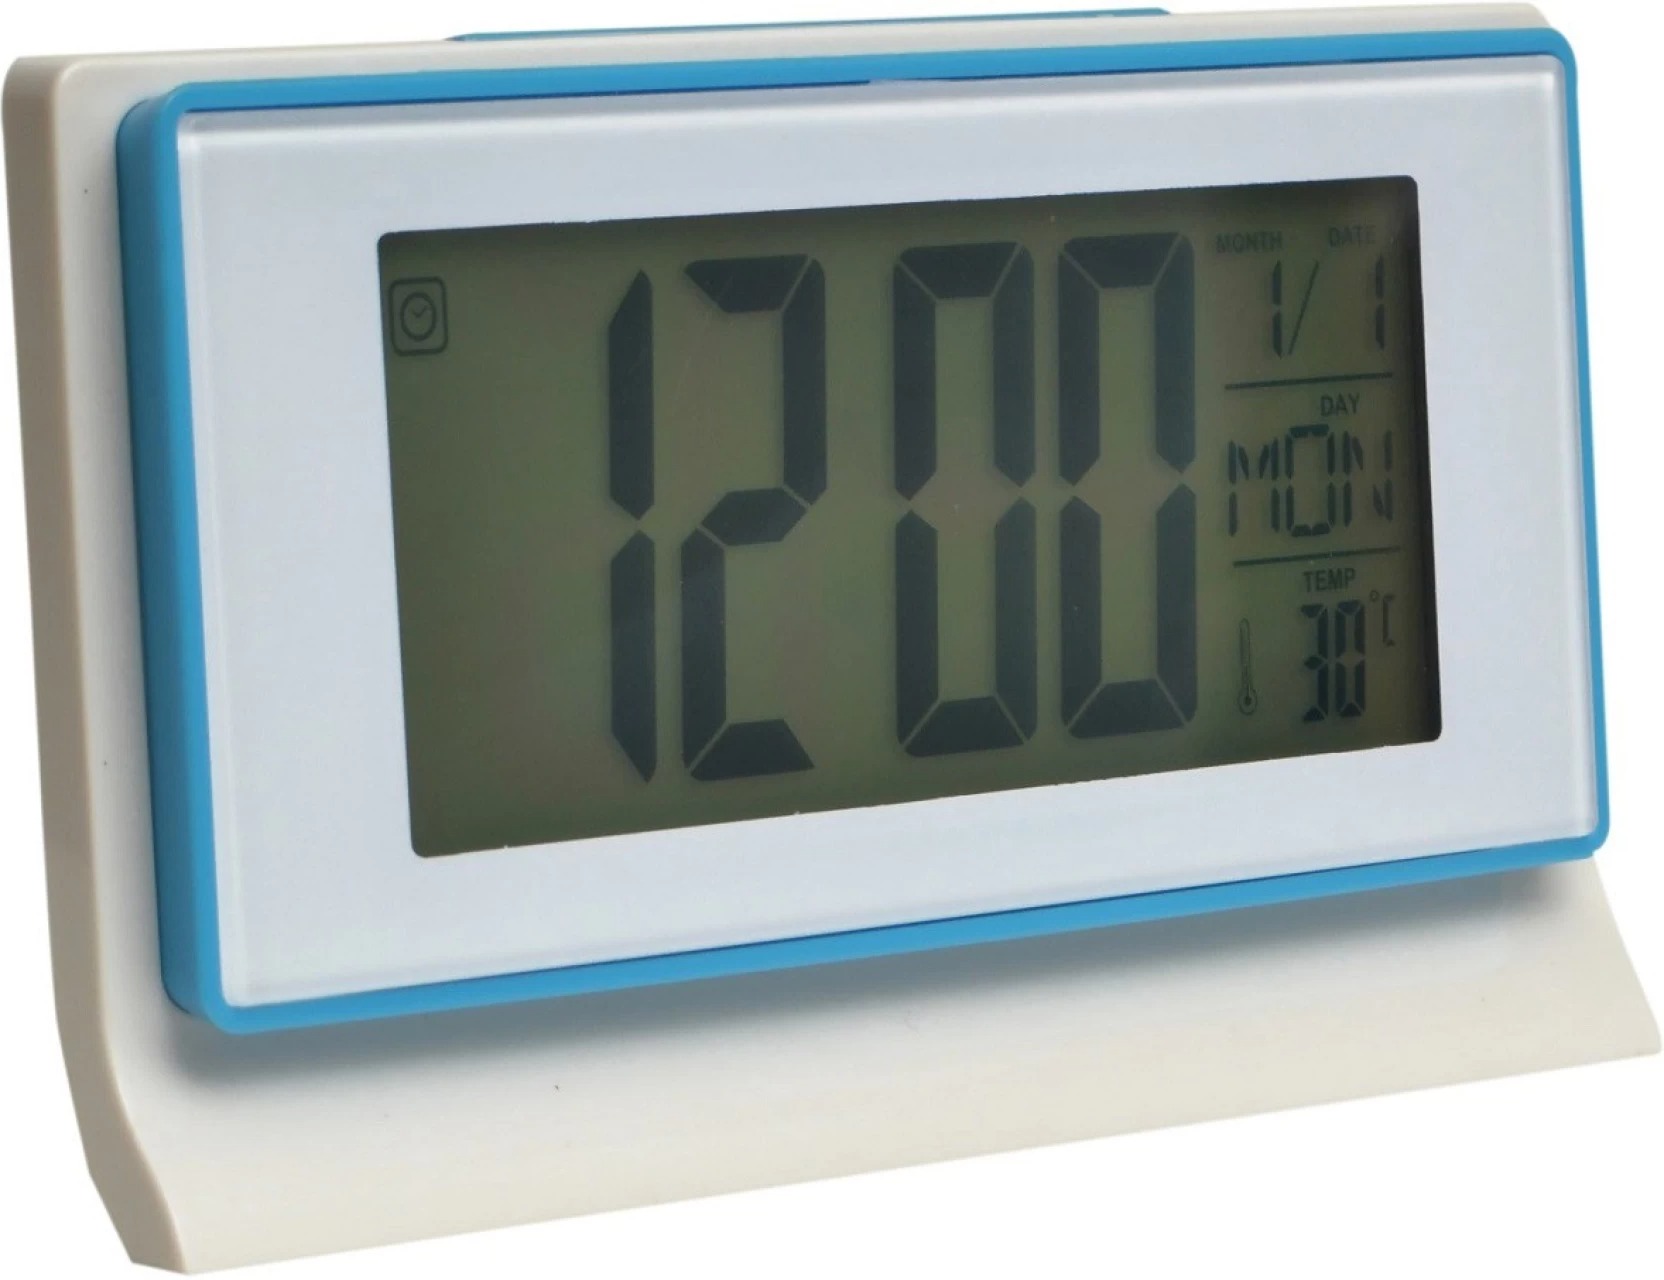 Ceas digital cu alarma DS-3601, control vocal, temperatura si calendar